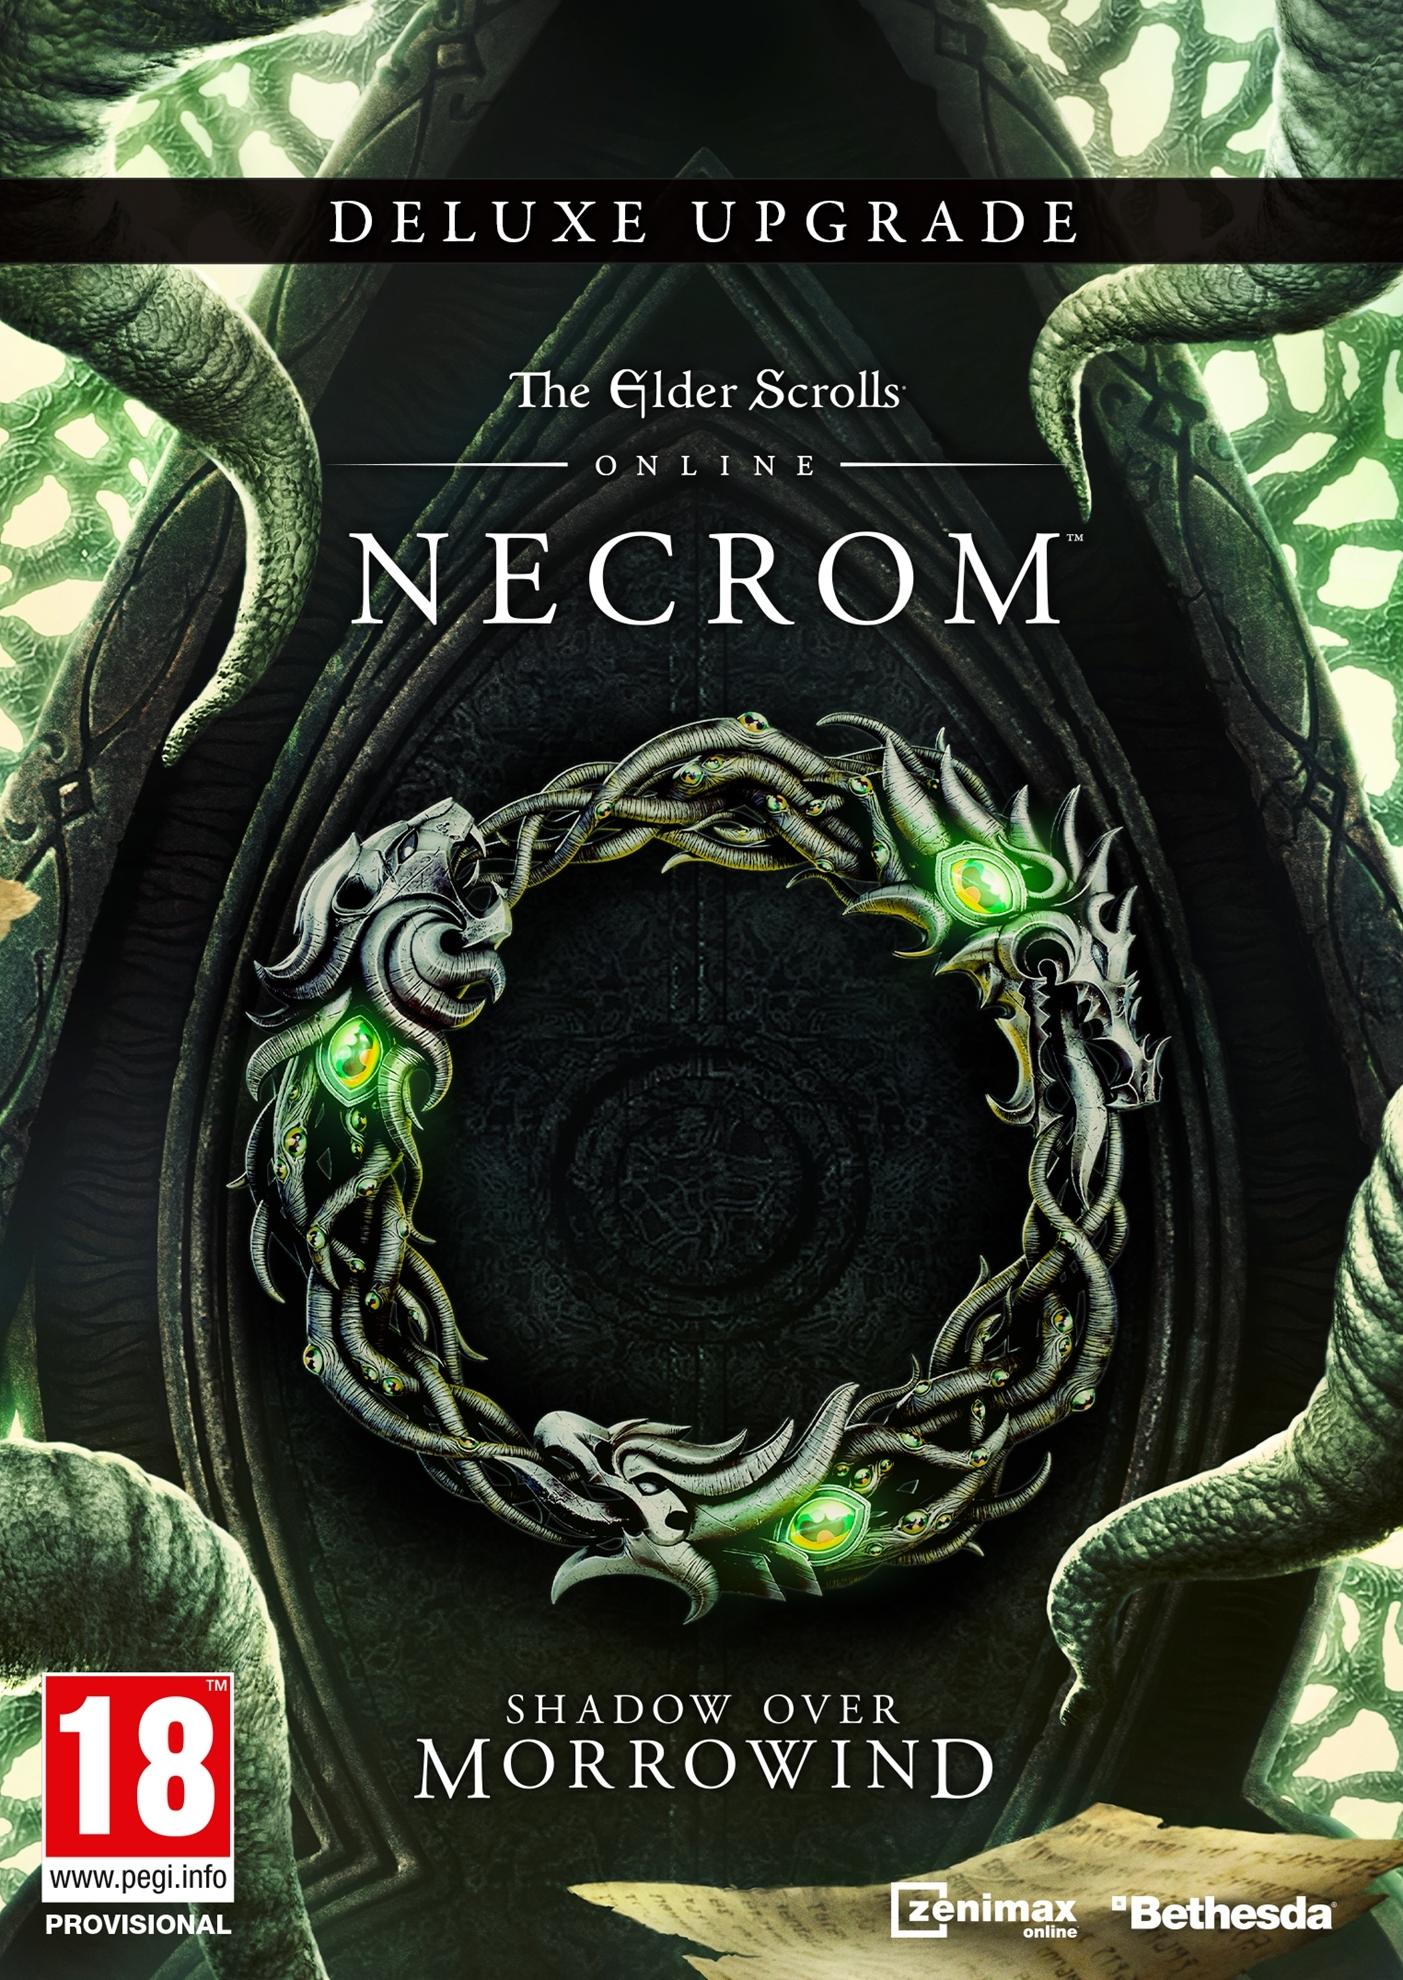 The Elder Scrolls Online Deluxe Upgrade: Necrom Limited Time Offer Pre Order (Elder Scrolls Online) | ROW 4 (4bcebcb5-14b0-4c39-bf2f-17fbc8bd501a)